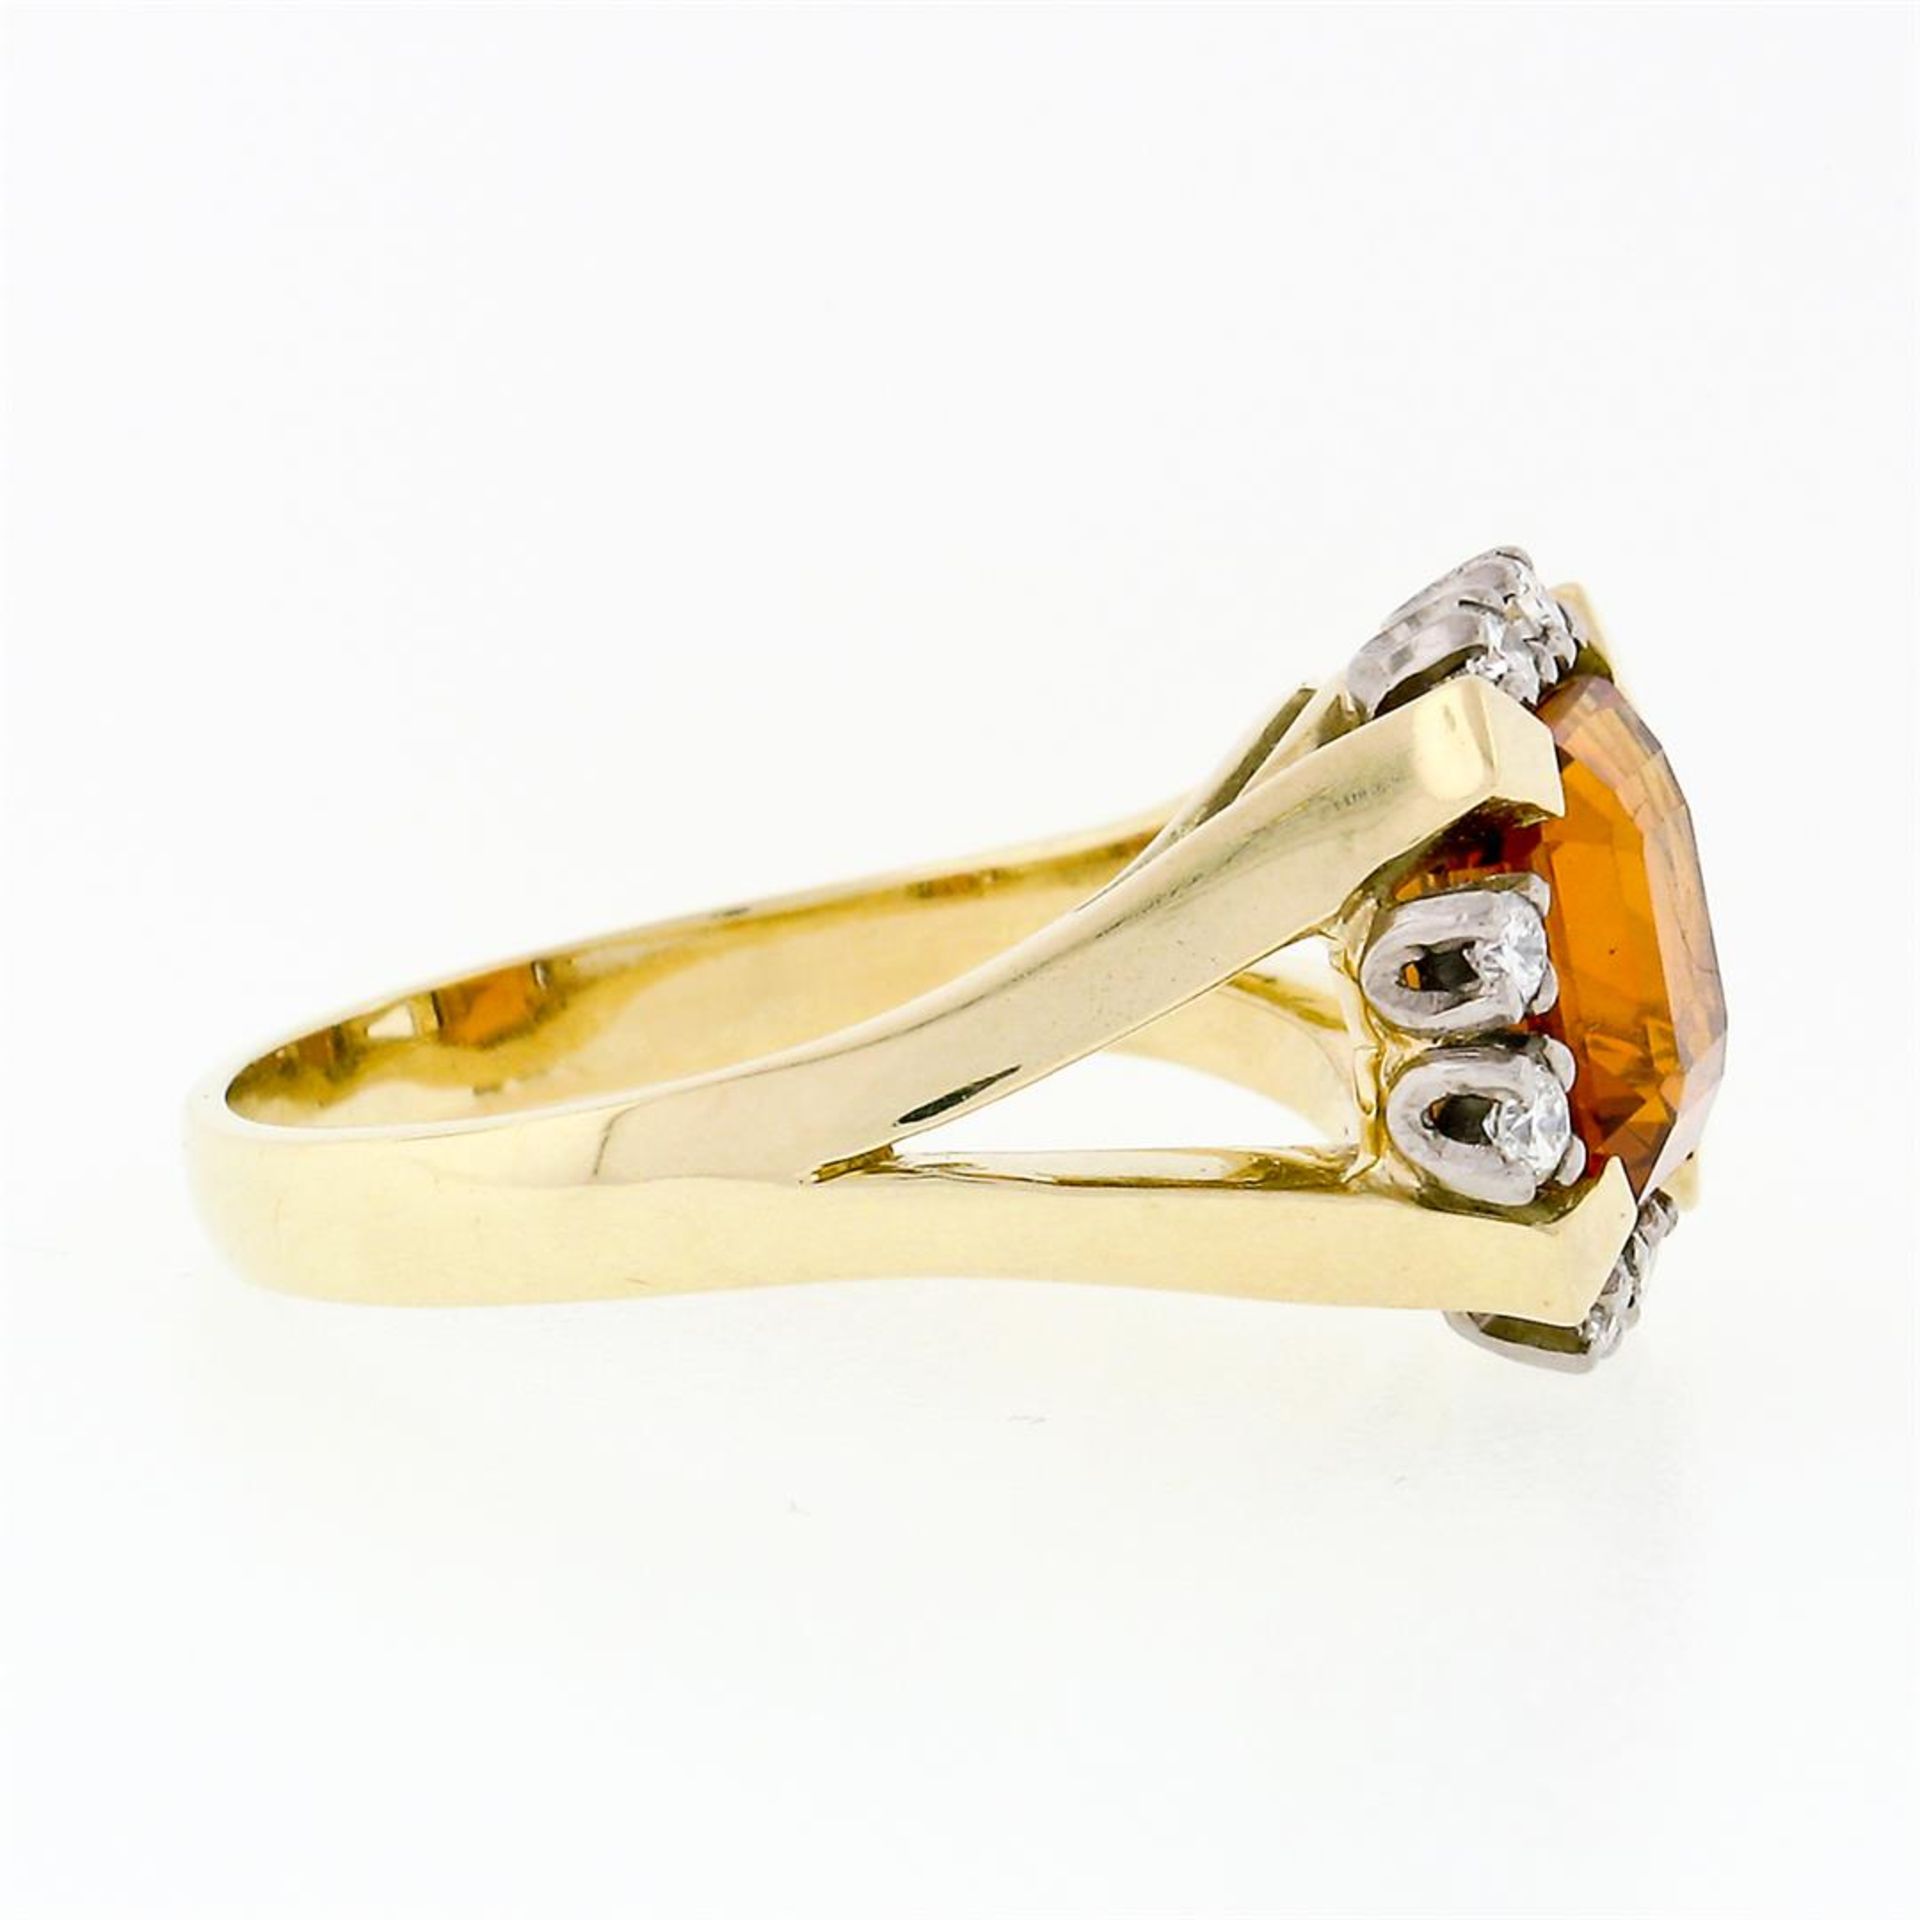 Vintage 14K Gold GIA Fine Quality Vivid Orange Step Cut Citrine & Diamond Ring - Image 6 of 9